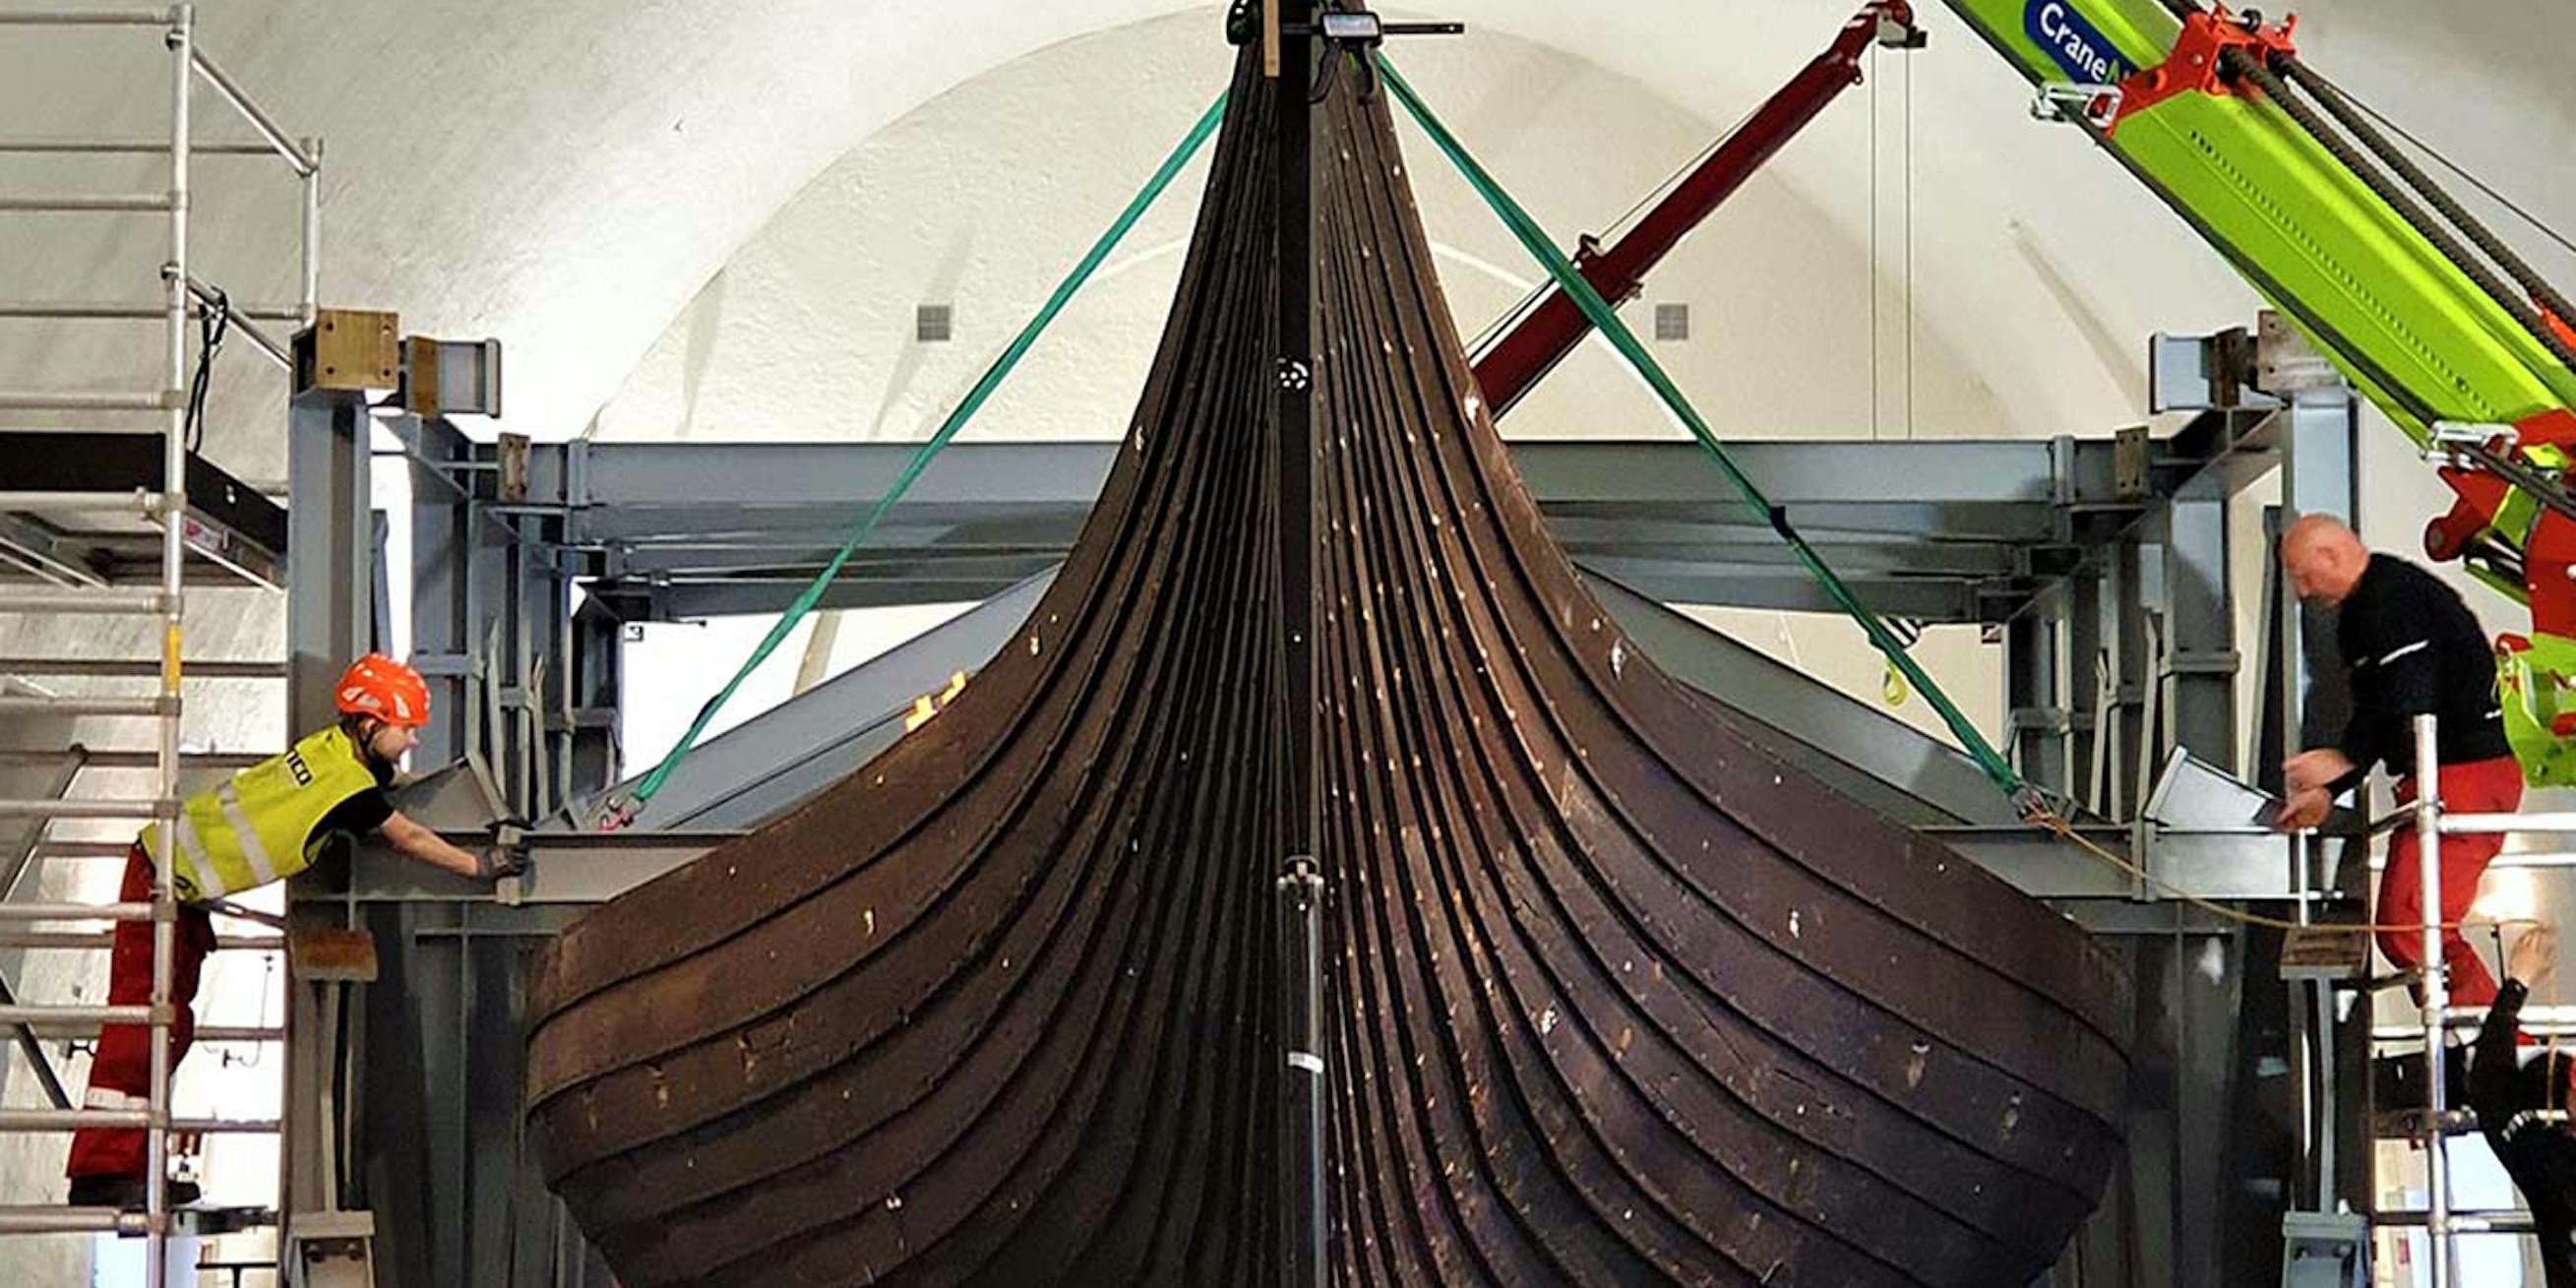 Gokstad Vikingeskib stålkonstruktion